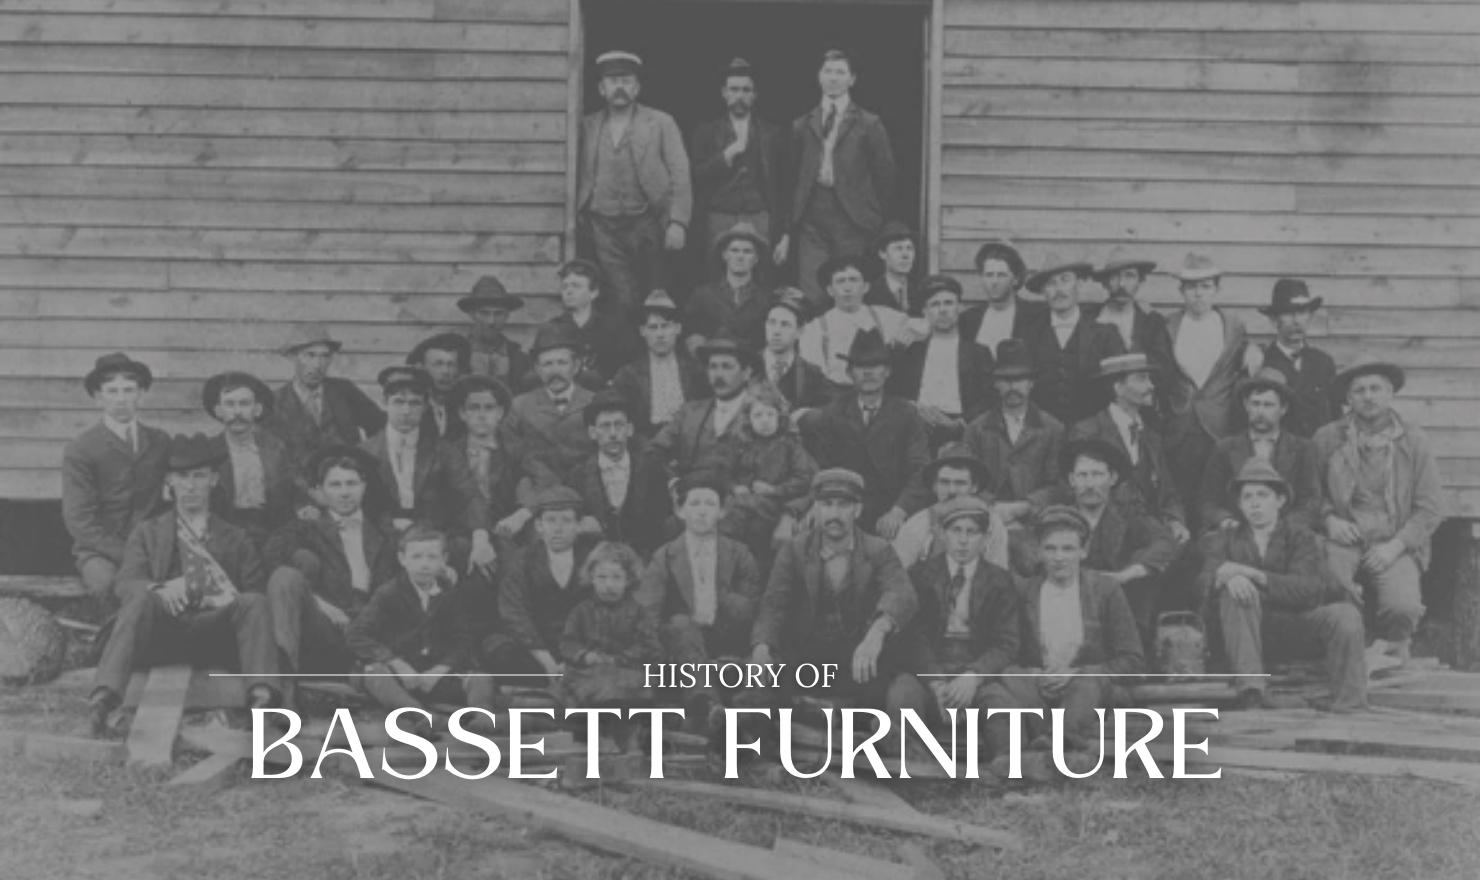 History of Bassette Furniture